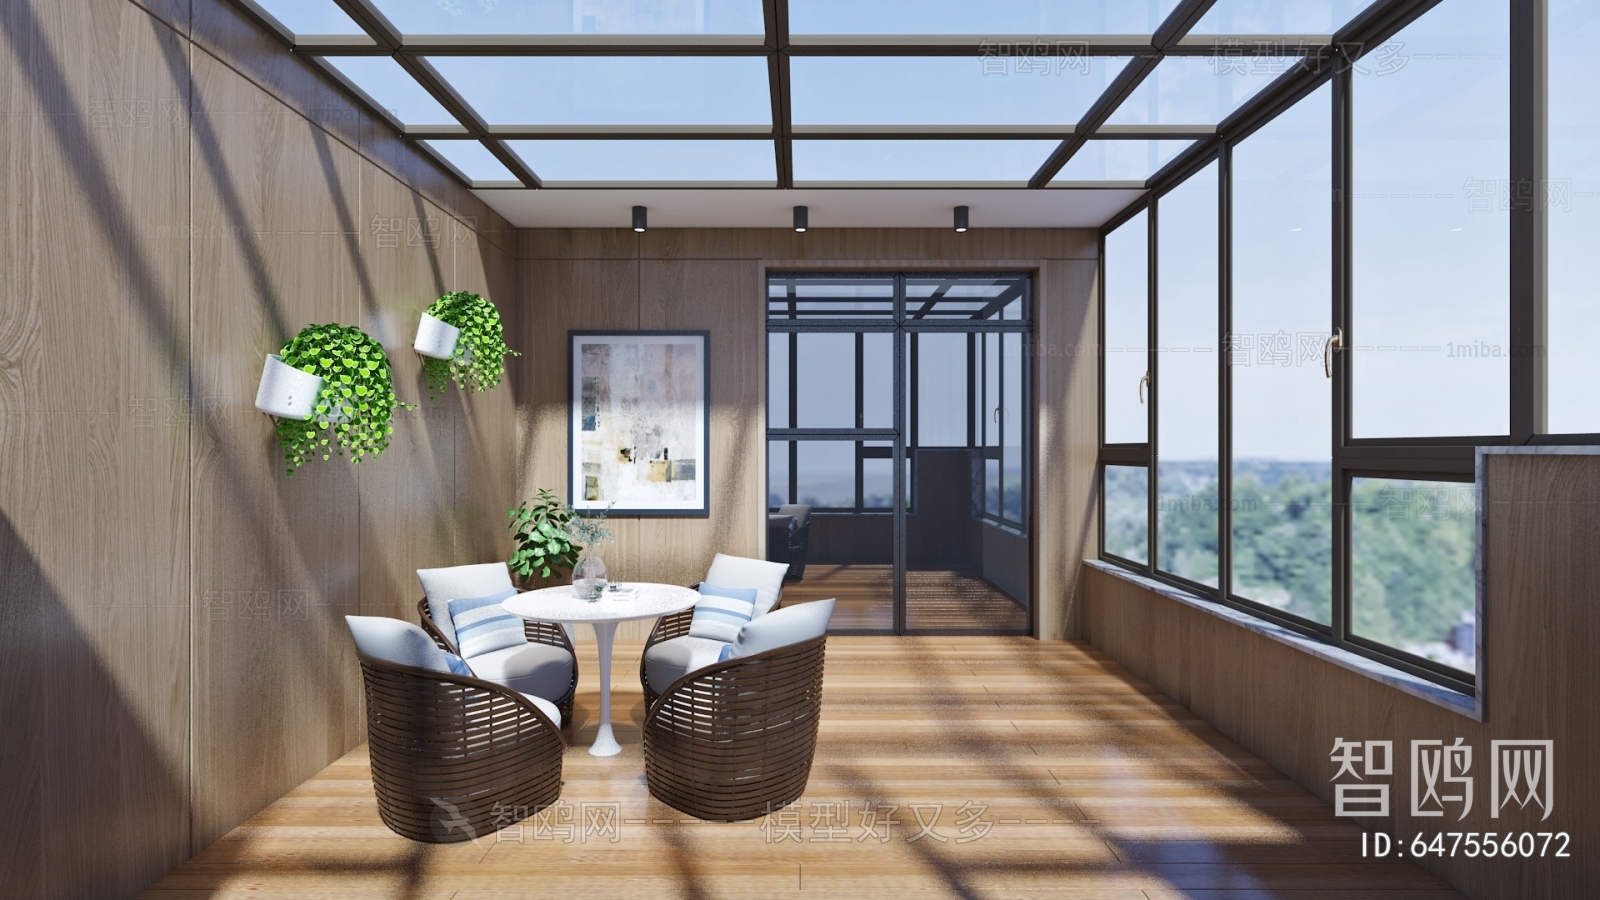 Modern Glass Sun Room